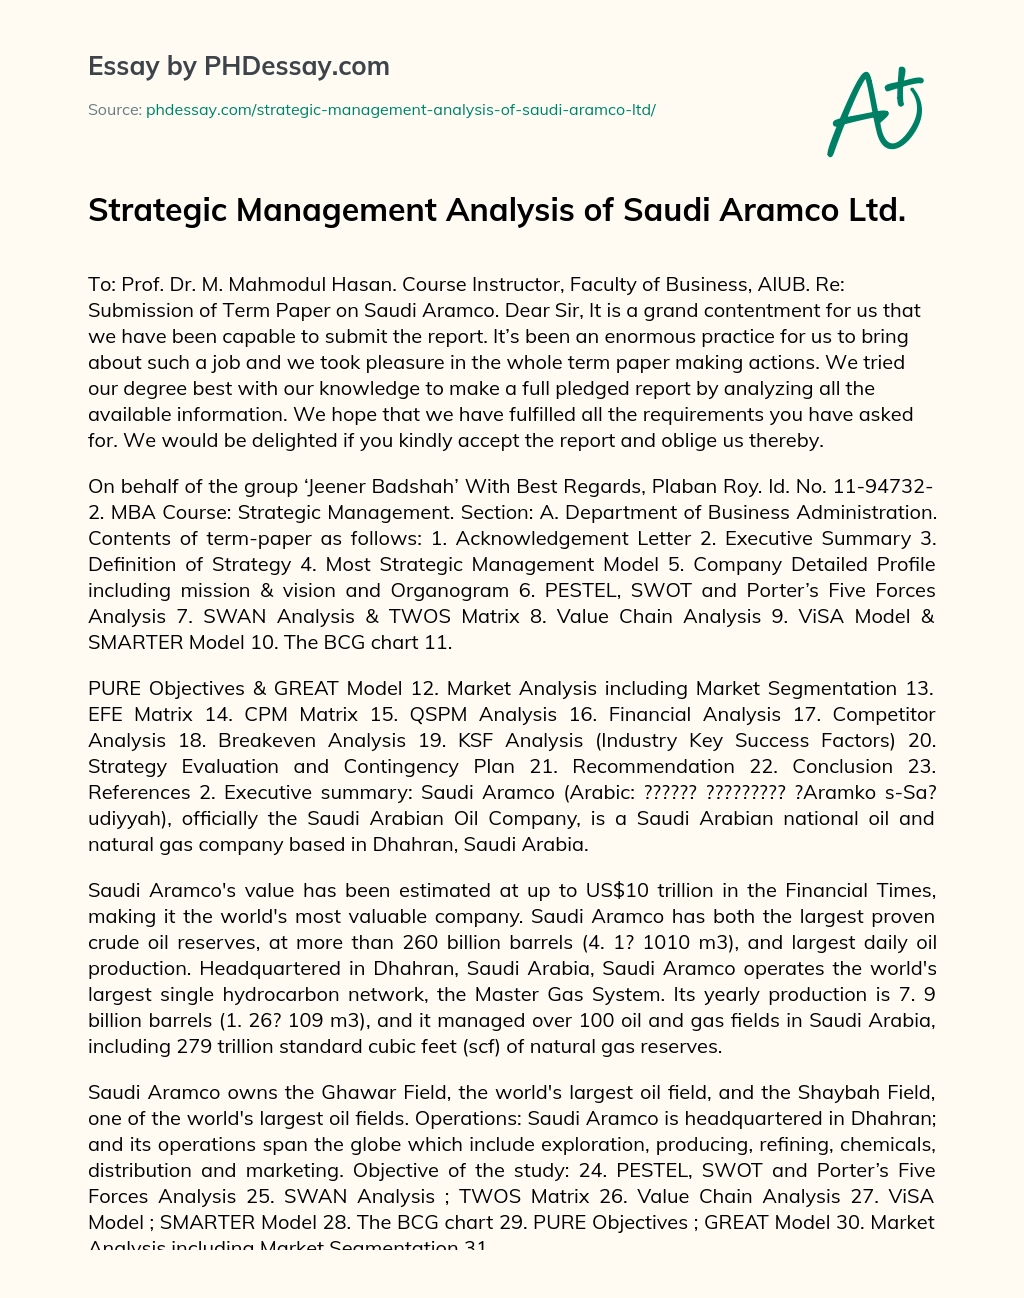 Strategic Management Analysis of Saudi Aramco Ltd. essay